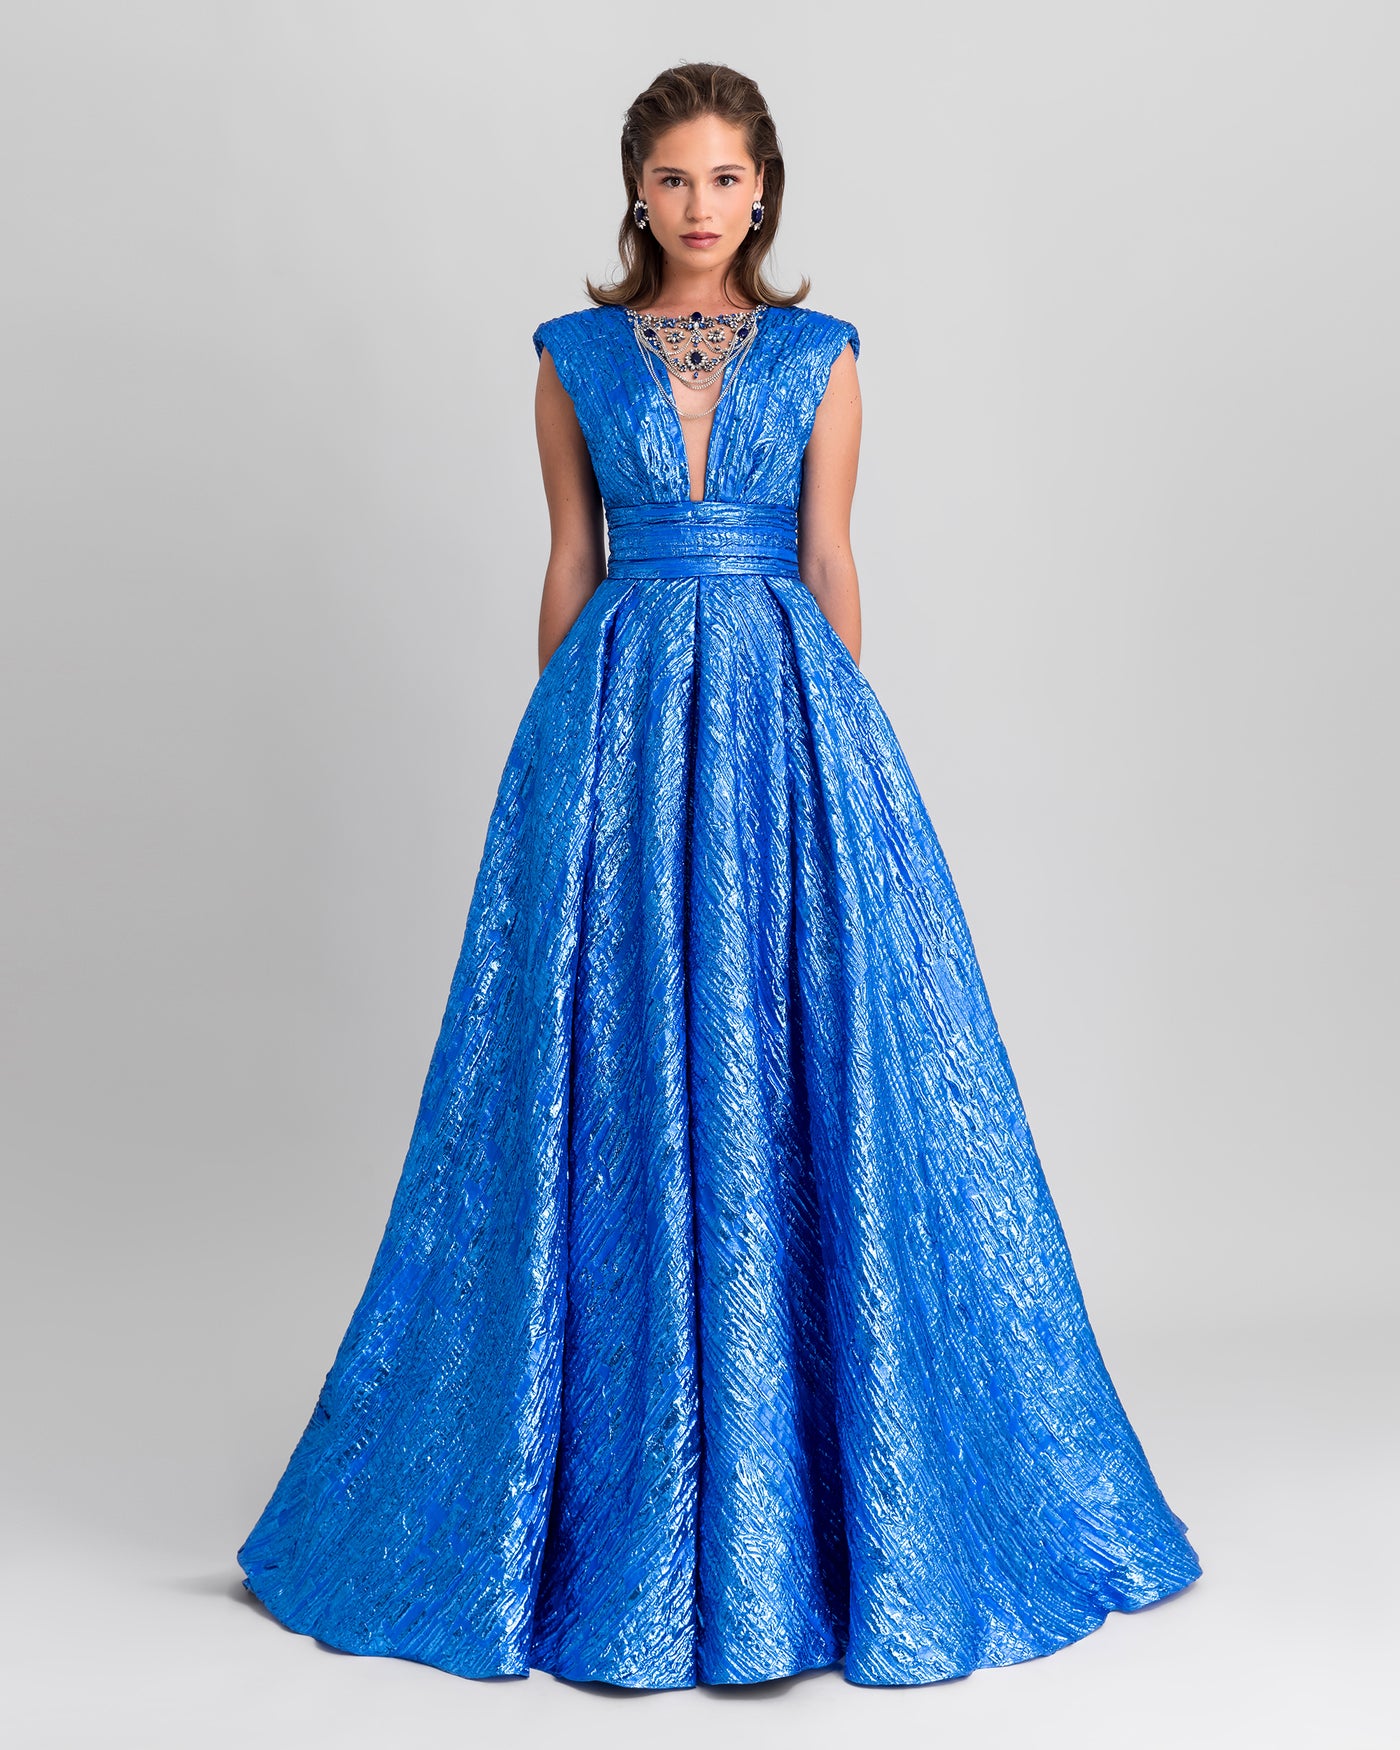 Princess Cut Blue Dress